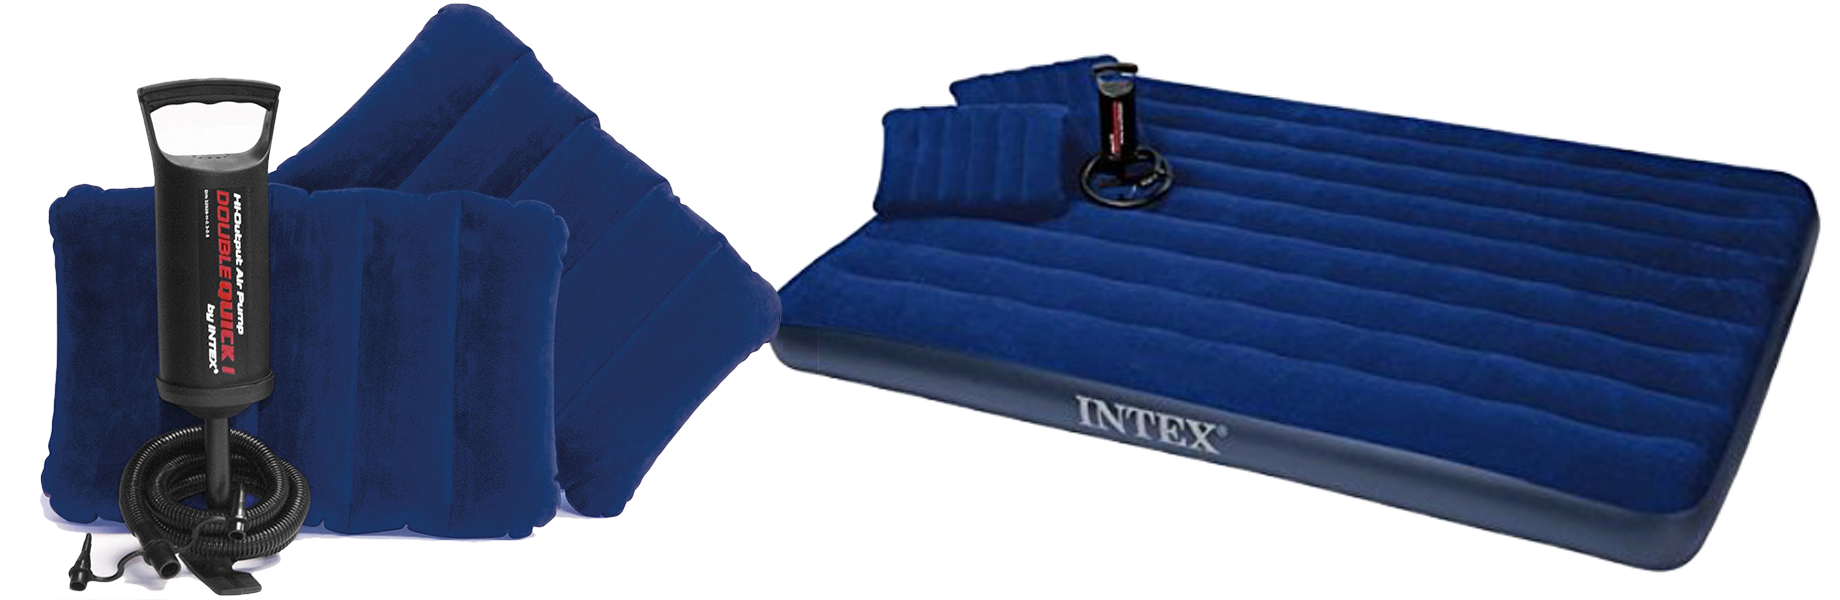 intex classic best air mattress